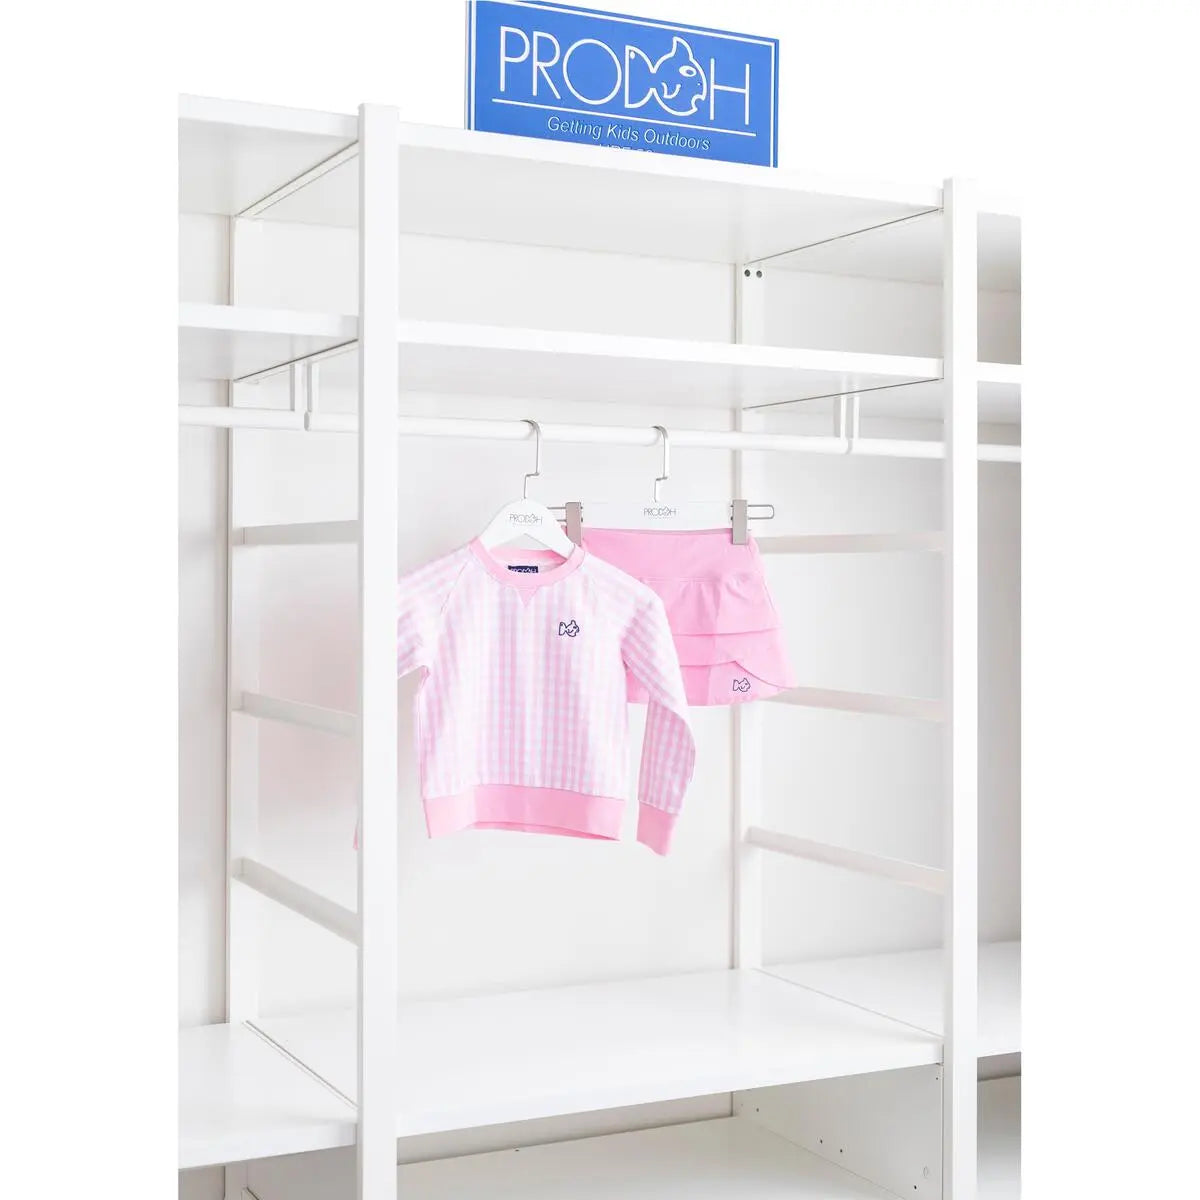 Girl's Pro Skort - Pink Frosting Prodoh